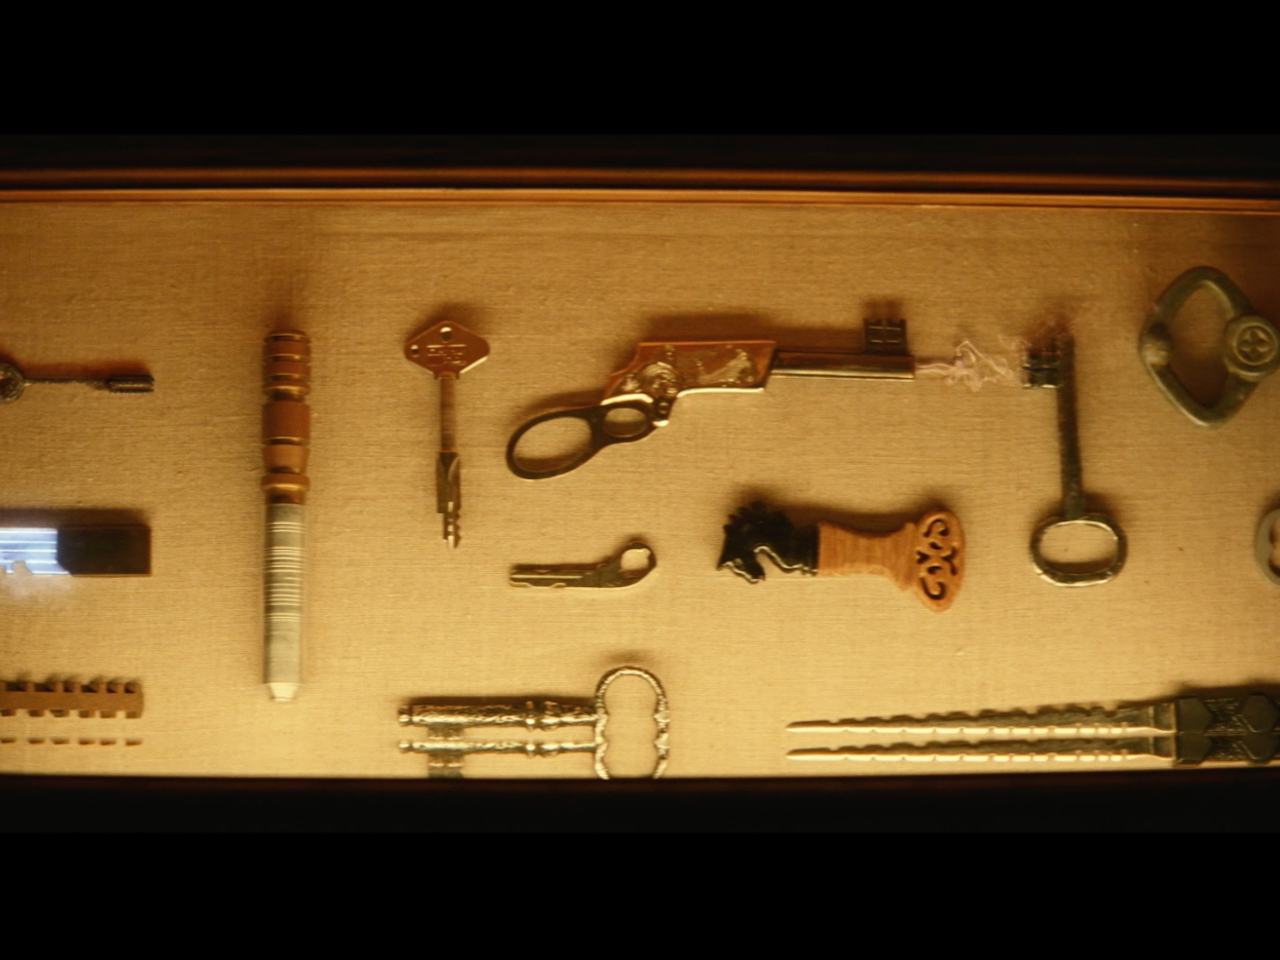 Keymakers workshop - cabinet of hero keys - (still from commercial)